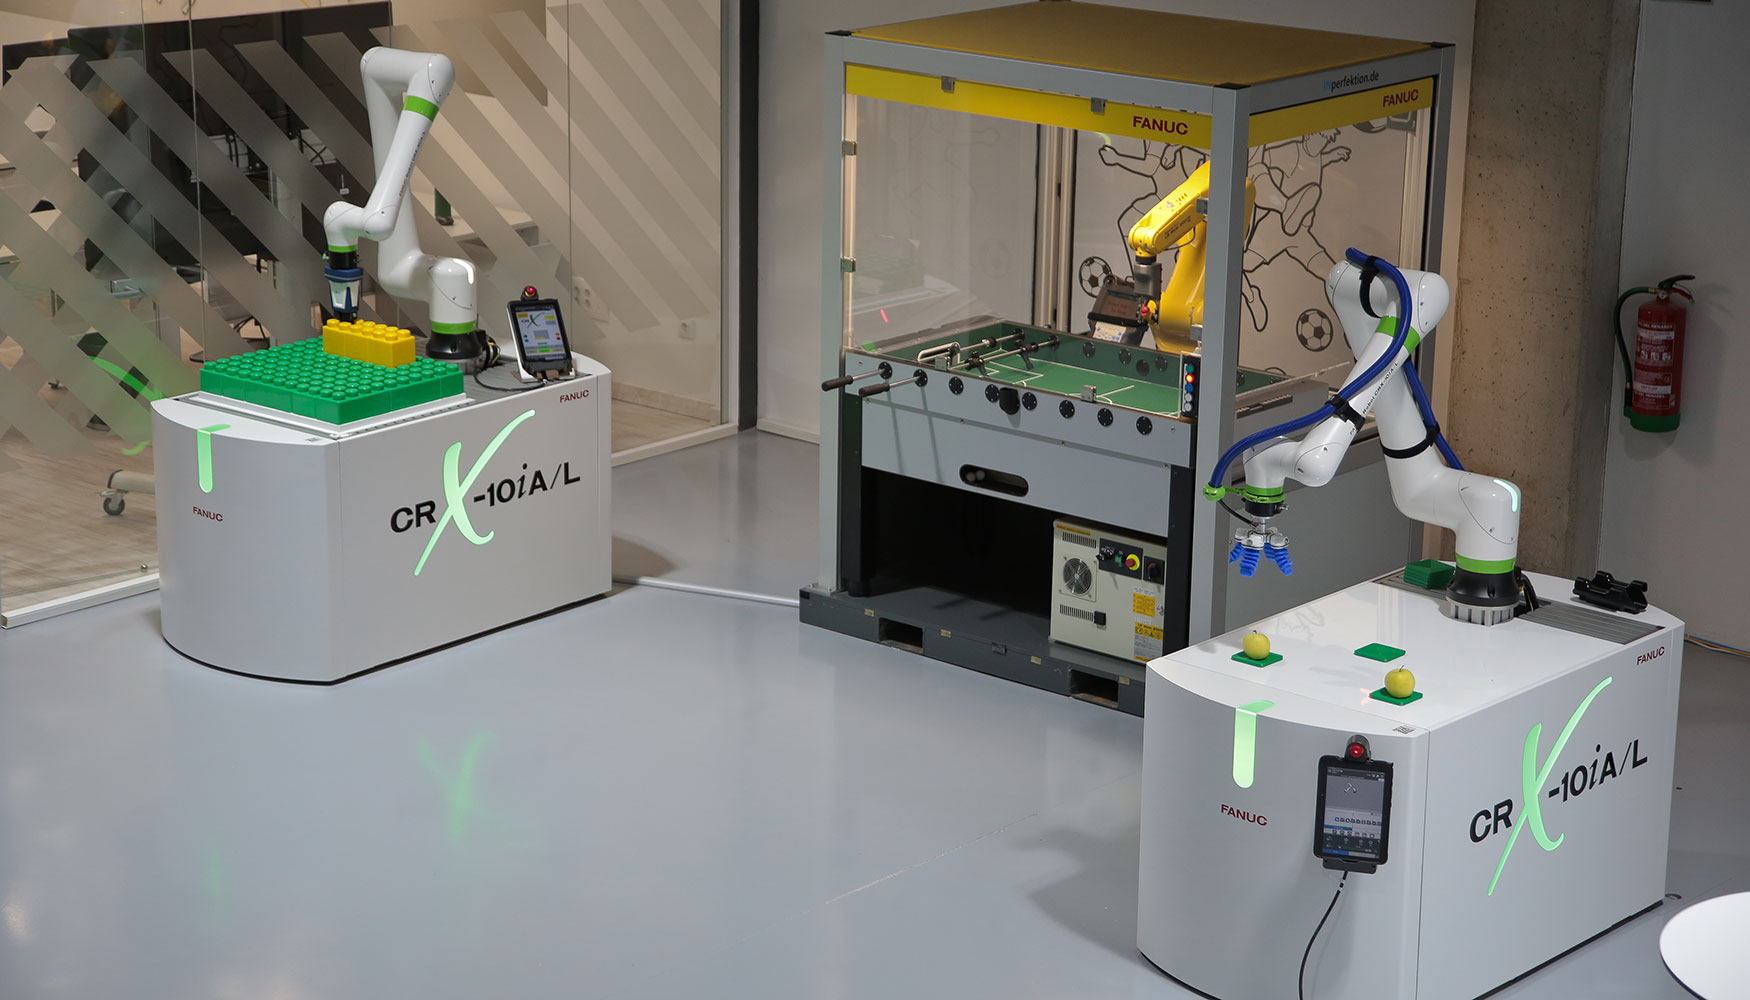 Robot colaborativo industrial Fanuc CRX-10iAL